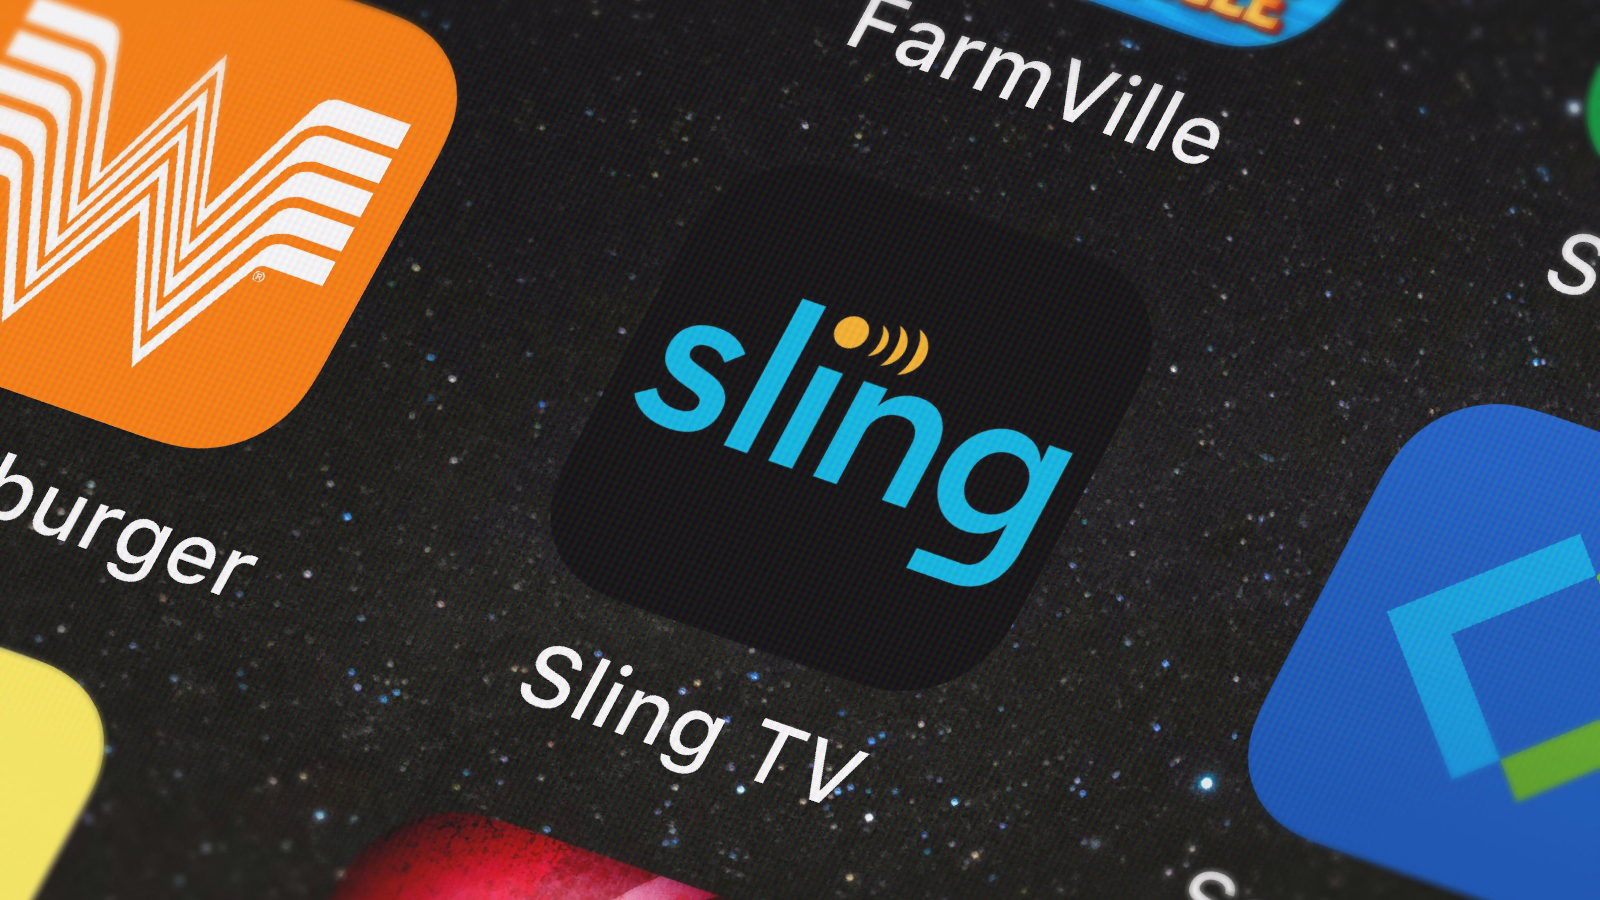 sling tv app windows 10 doesnt work